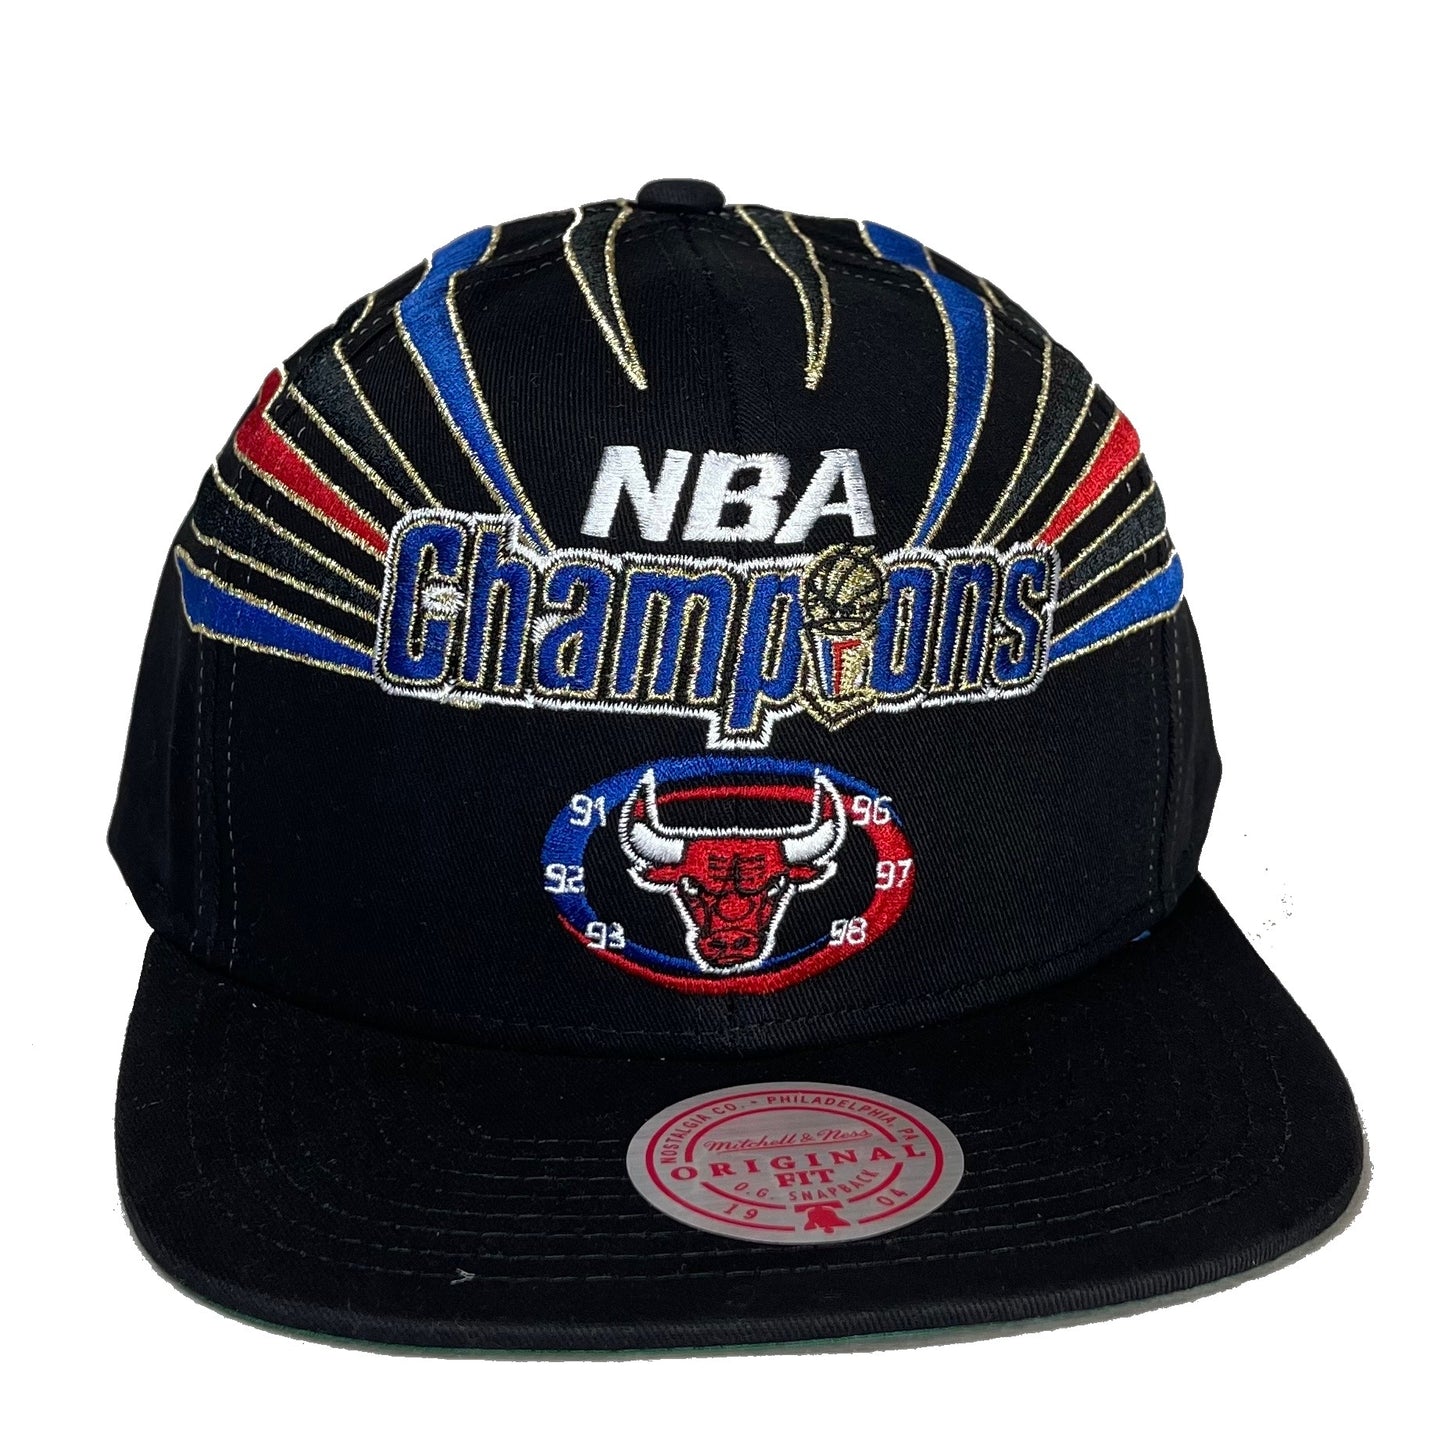 Chicago Bulls NBA Champions (Black) Snapback